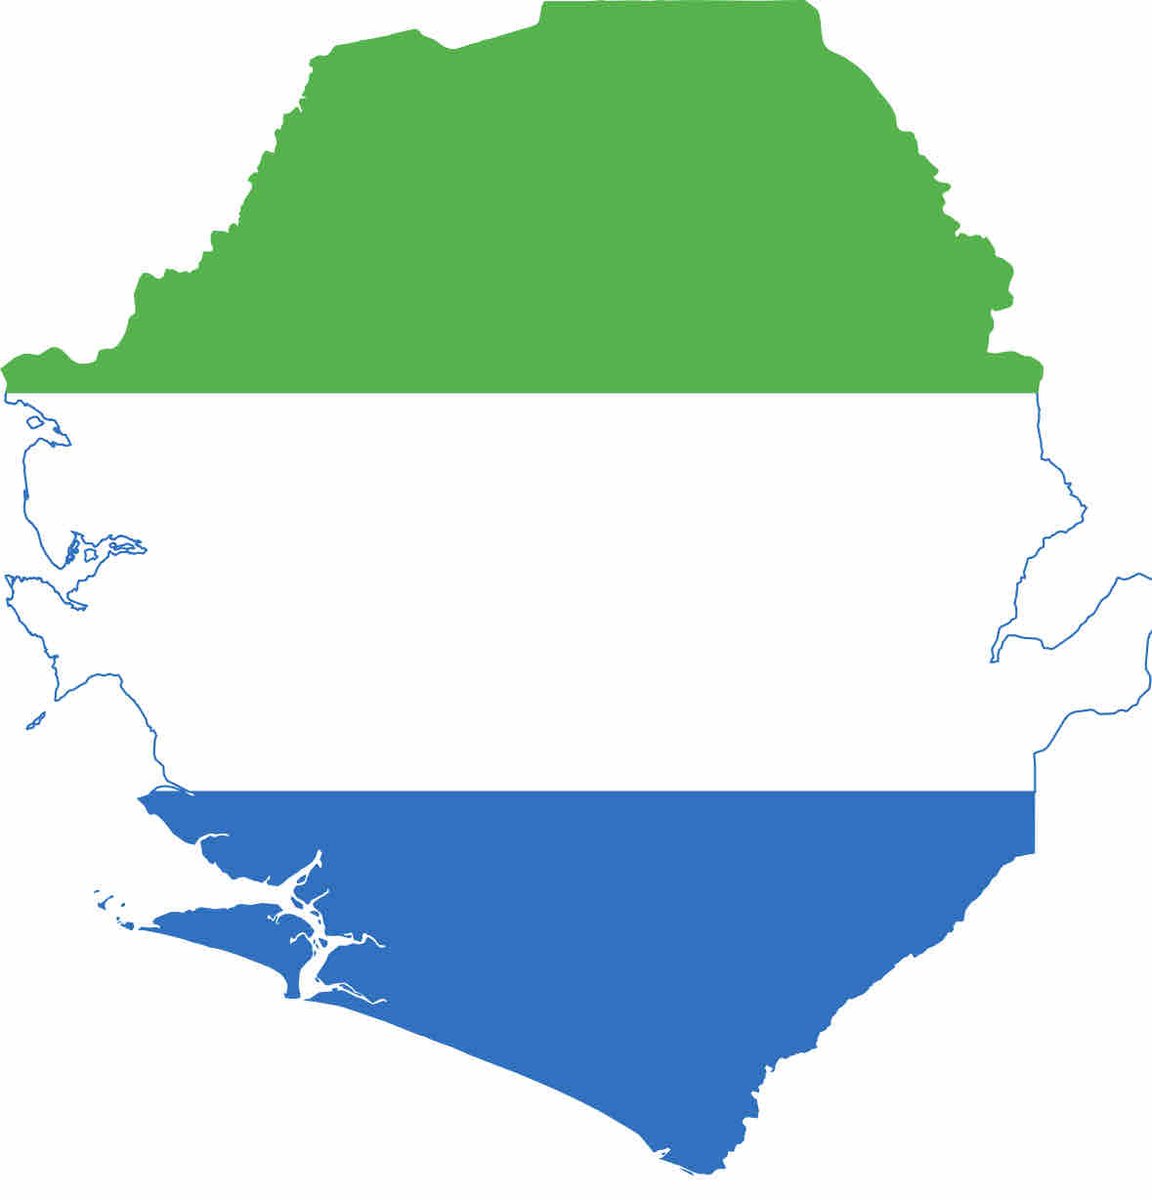 To a peaceful #SierraLeone #LandThatWeLove